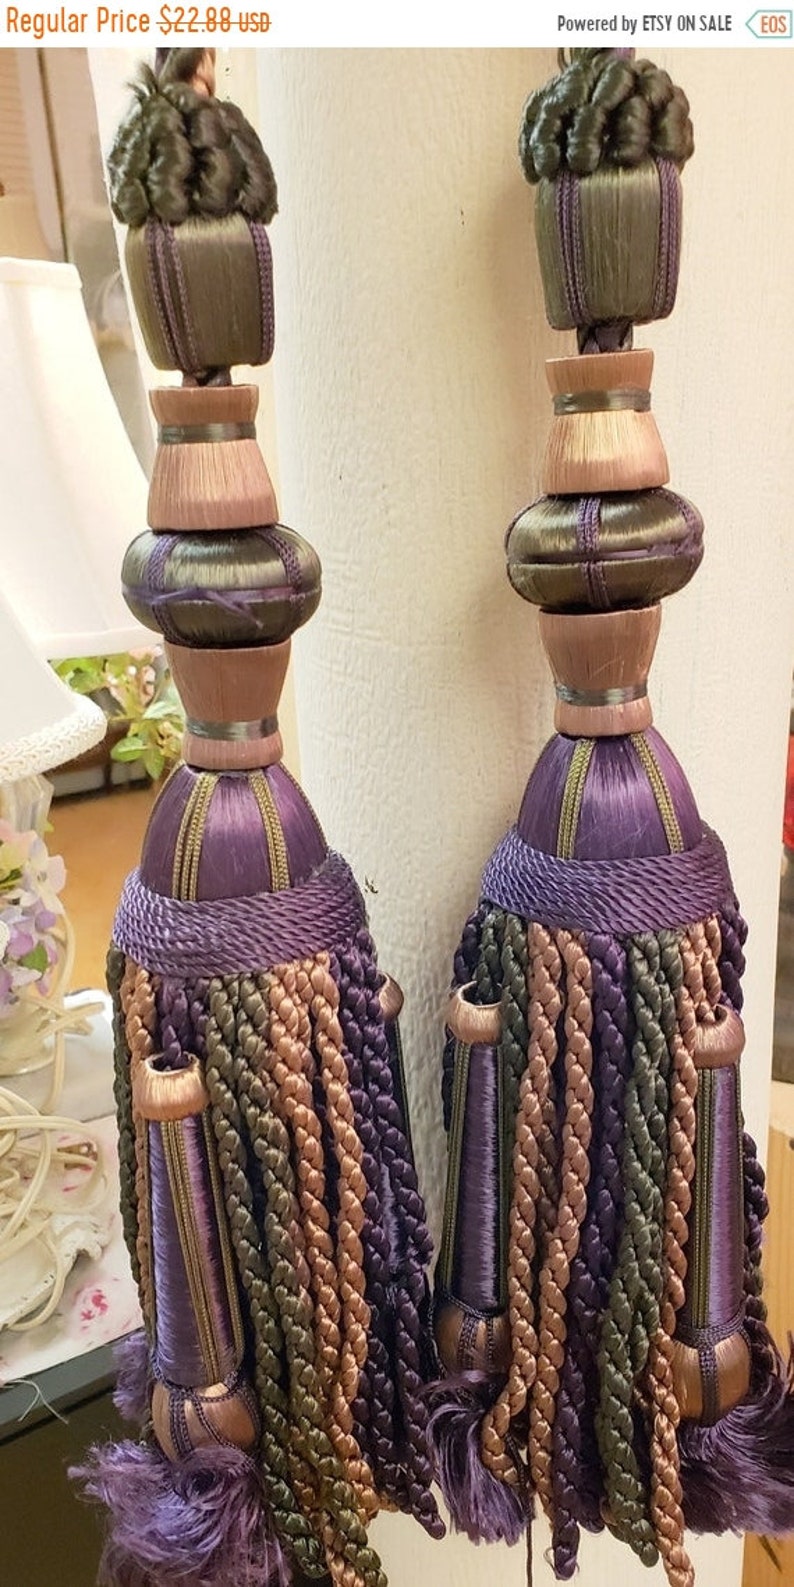 NEW YEAR SALE Tassels Drapery Accessories Jeweltones Purple image 1